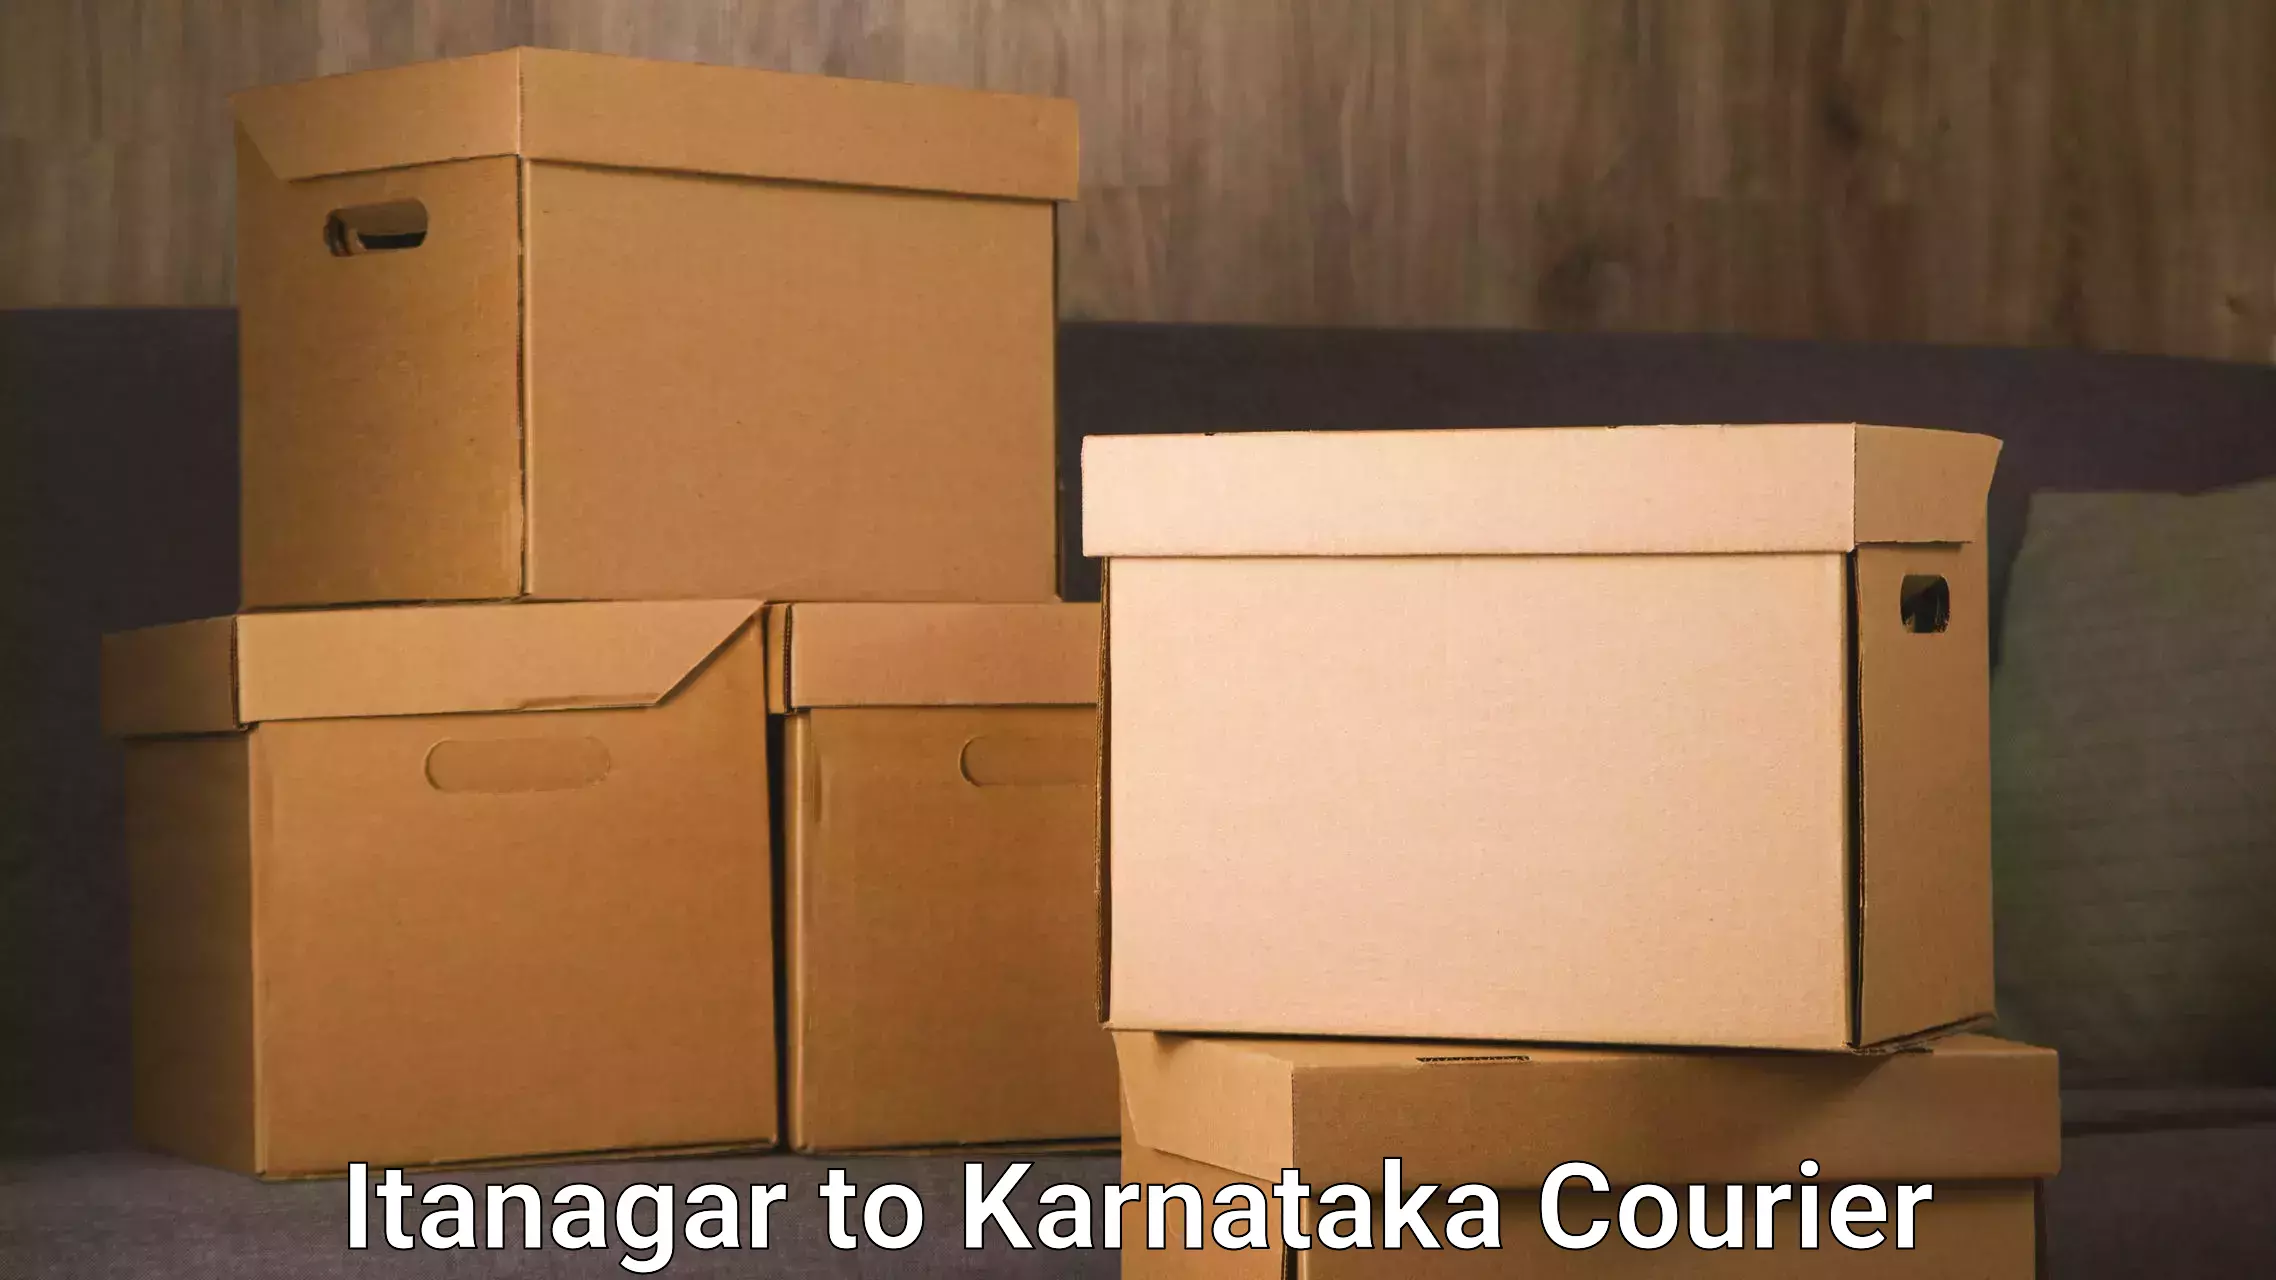 State-of-the-art courier technology Itanagar to Karnataka